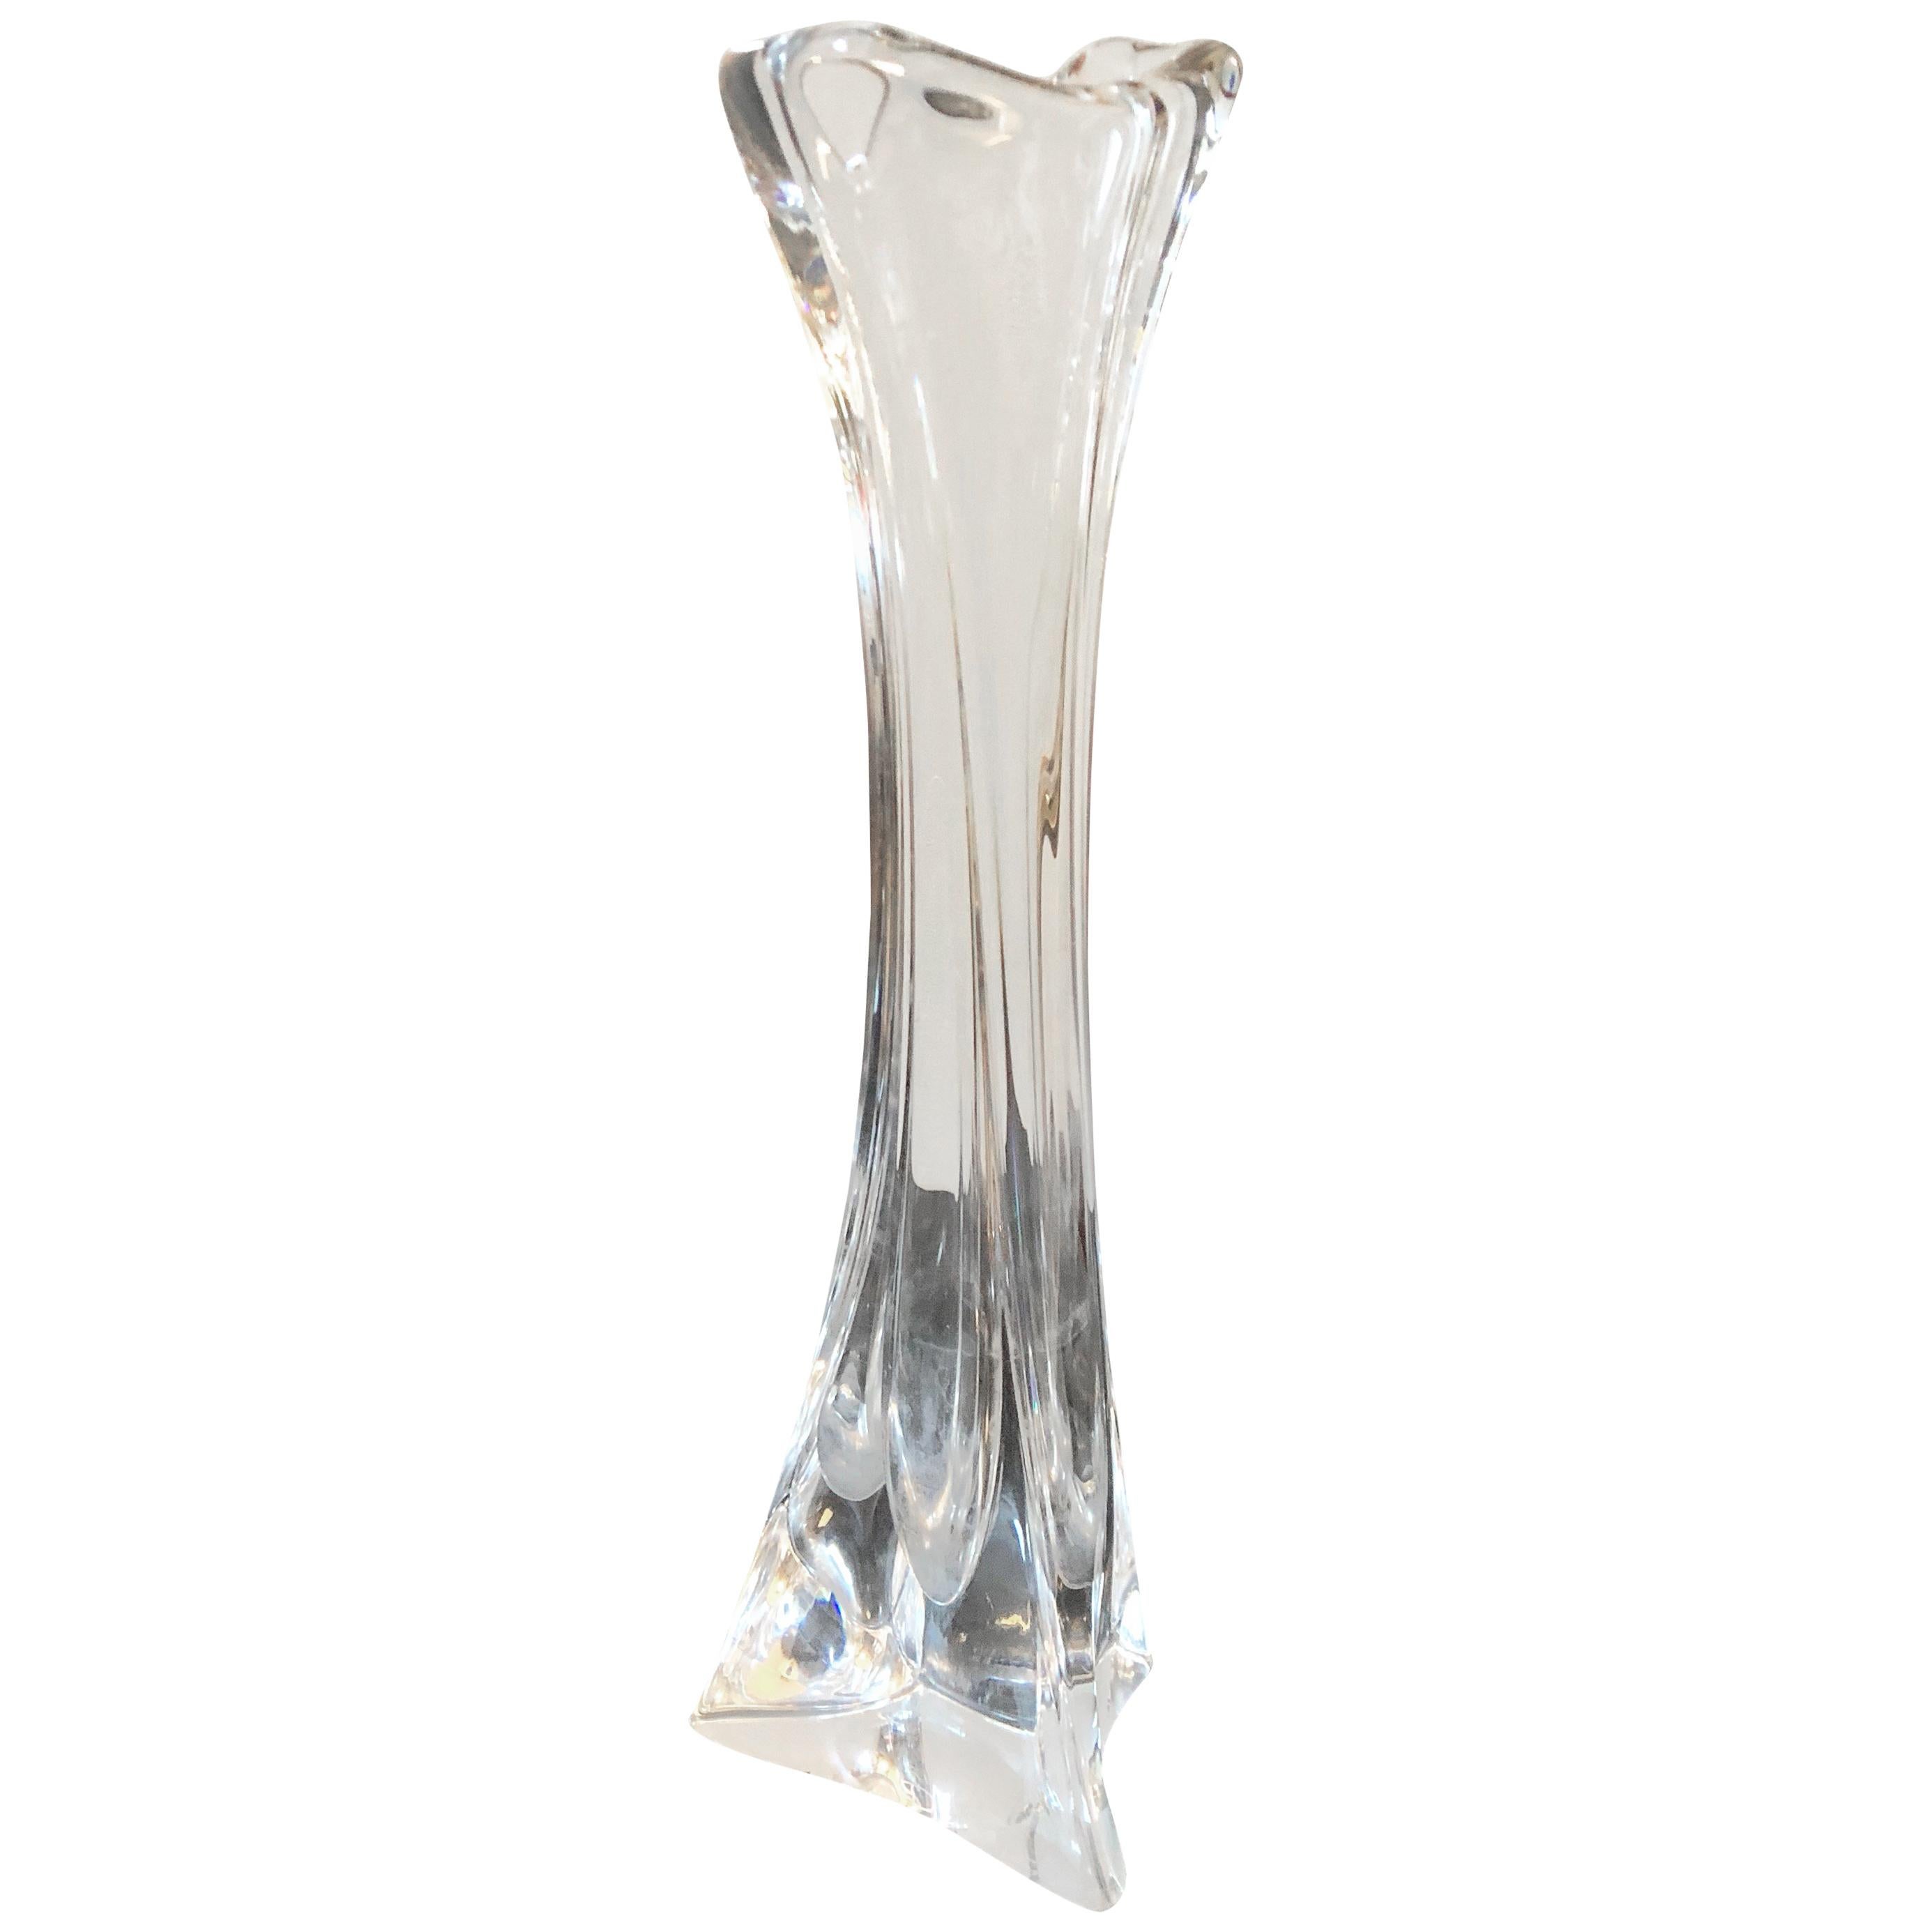 Translucent Crystal Vase by Daum, circa 1970